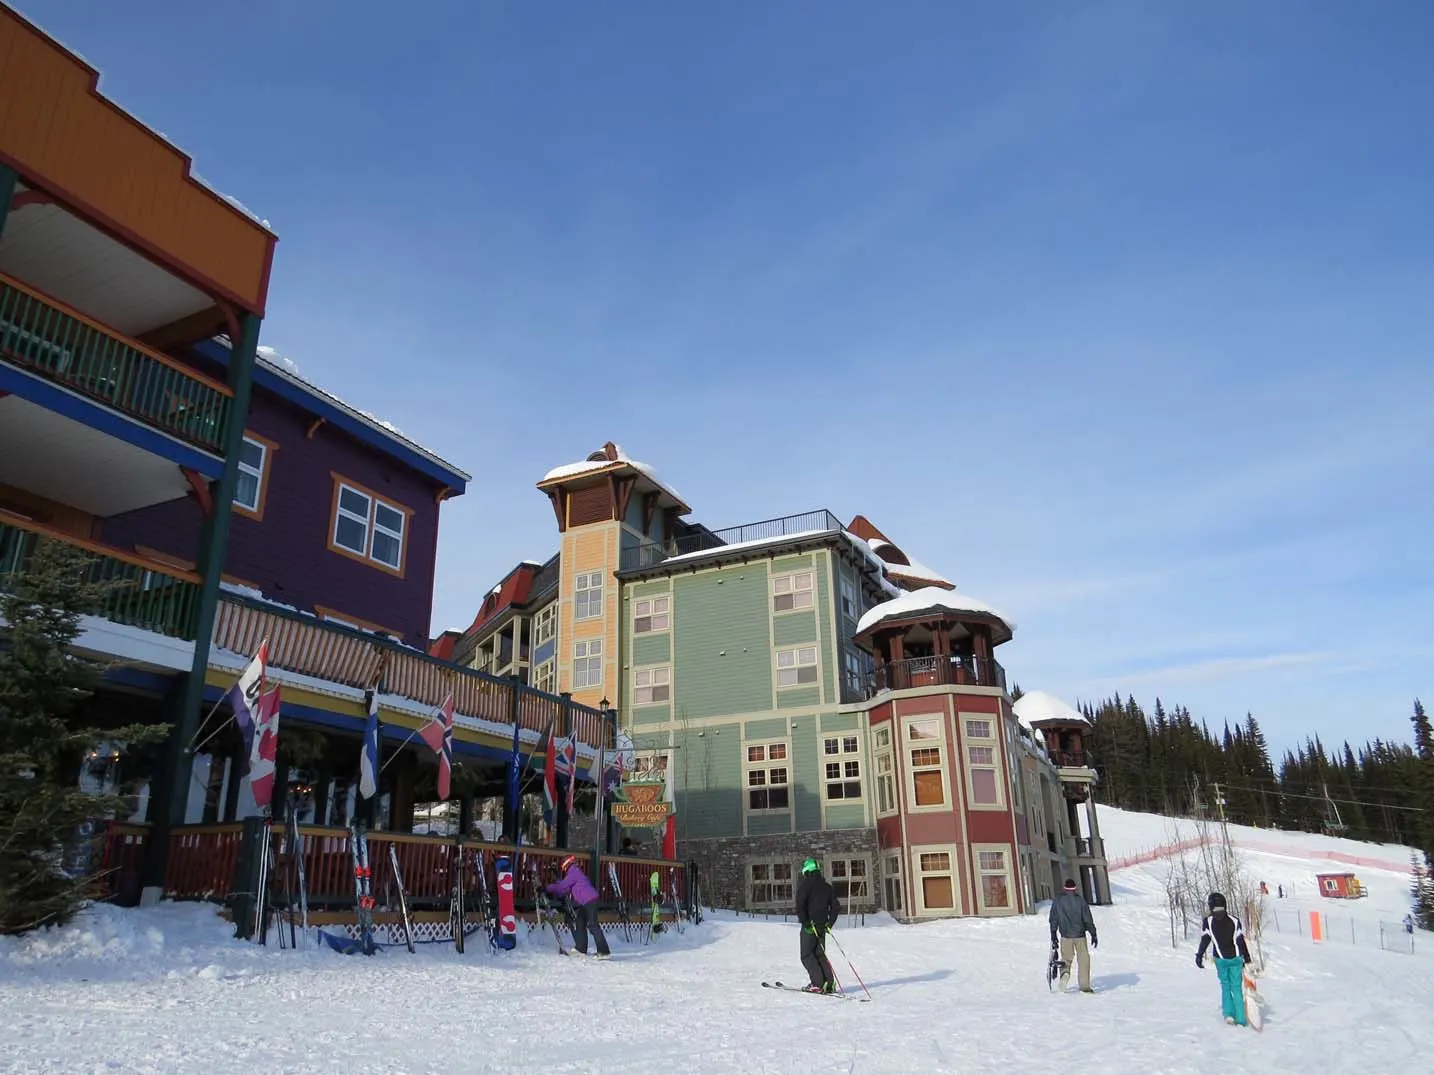 skiers and ski racks next to Silver Star village buildings